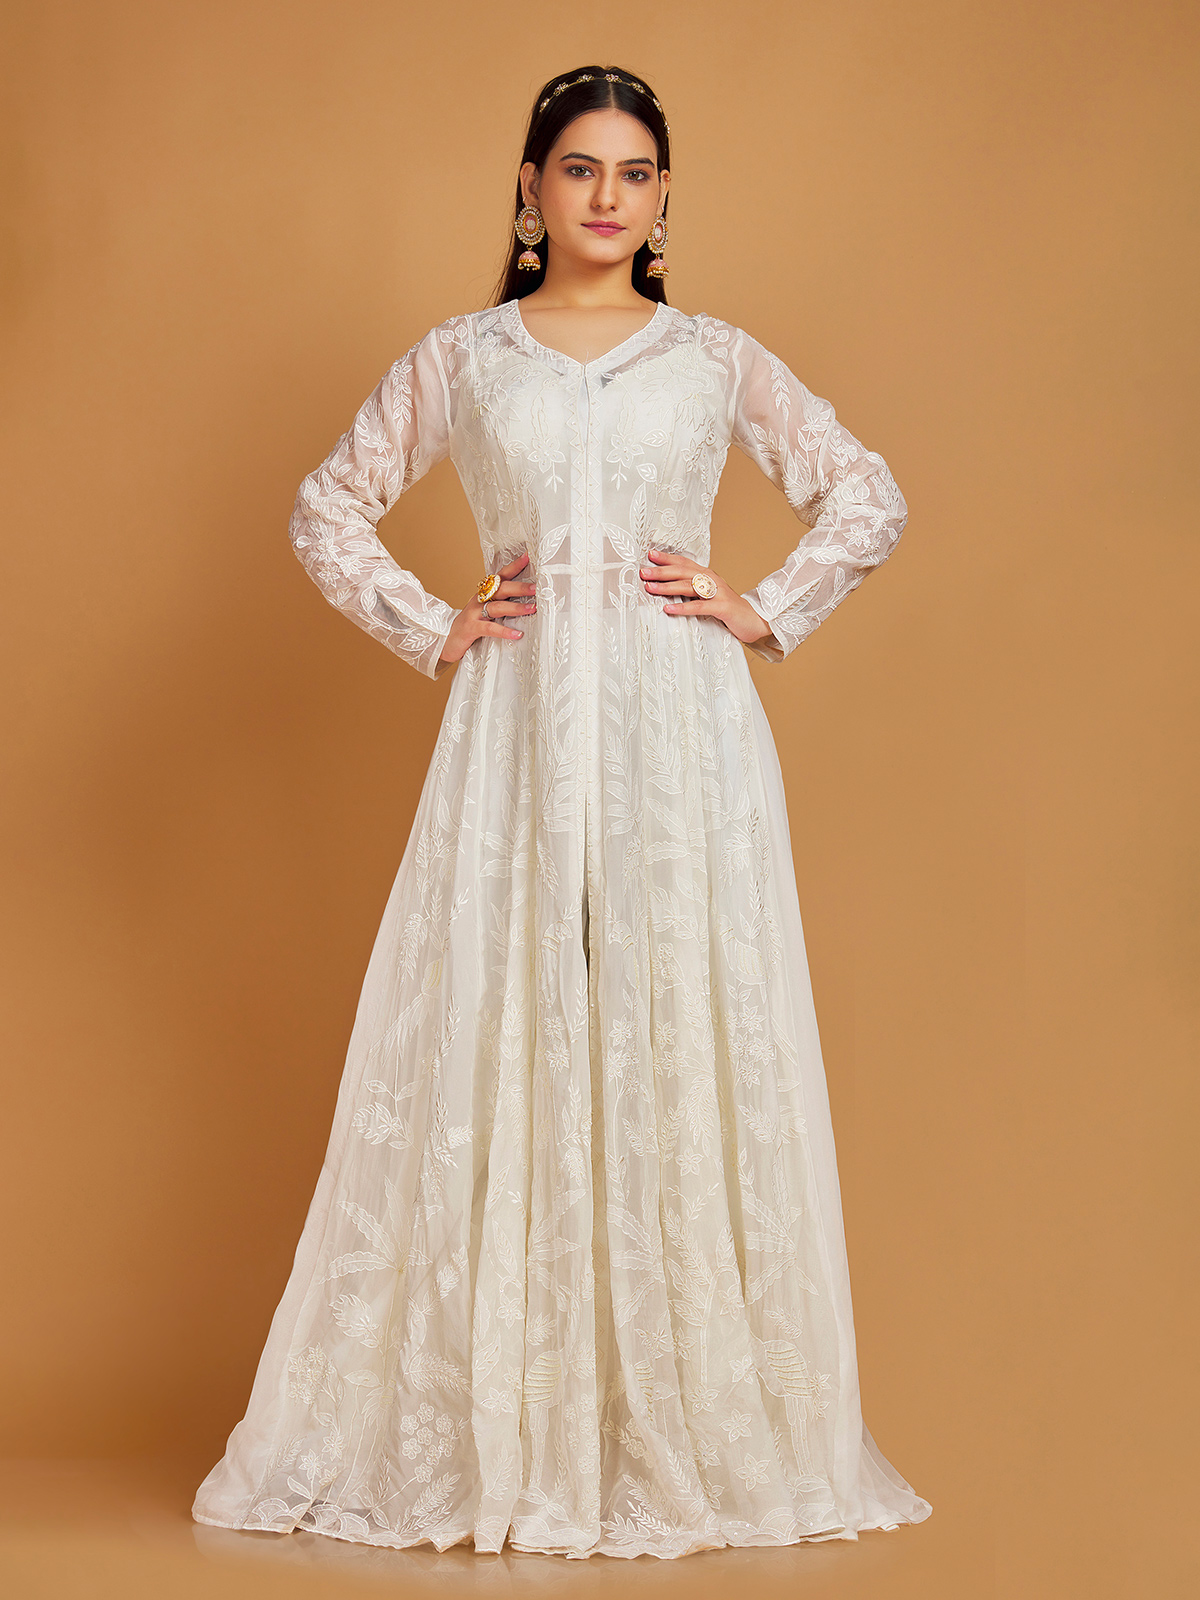 Buy Pakistani White Bridal Dress Online in India - Etsy